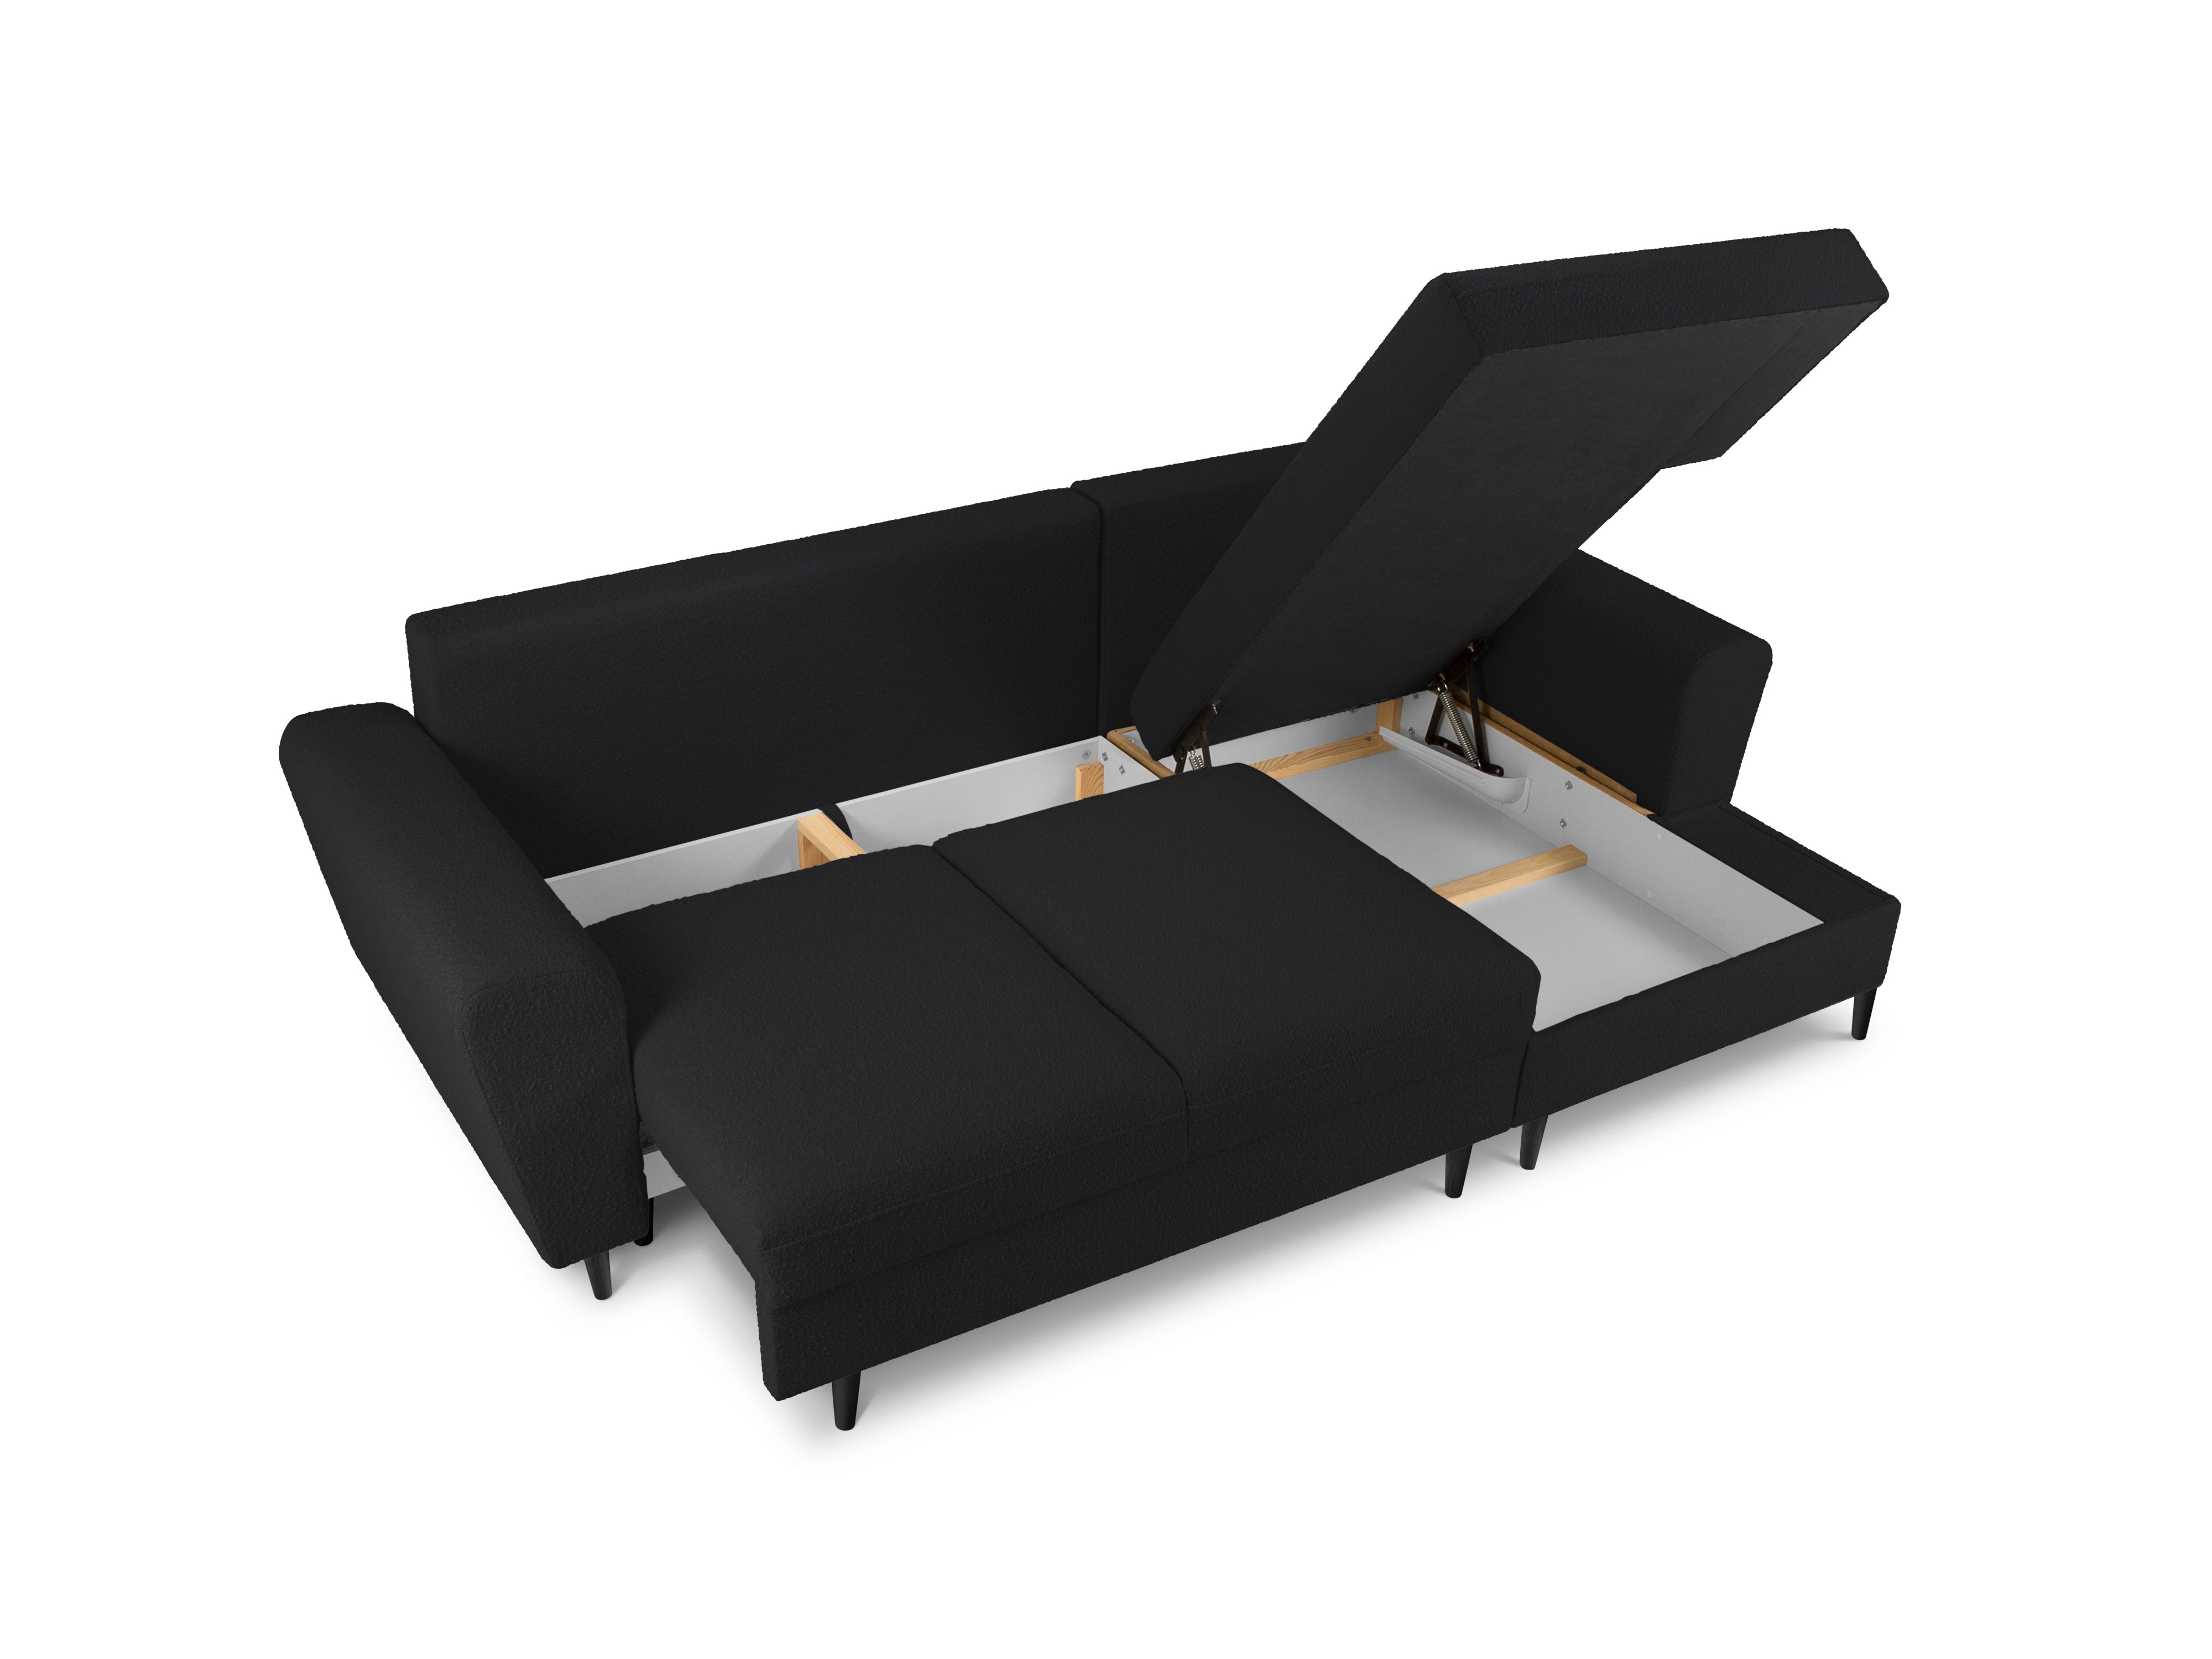 Black corner sofa with storage compartments